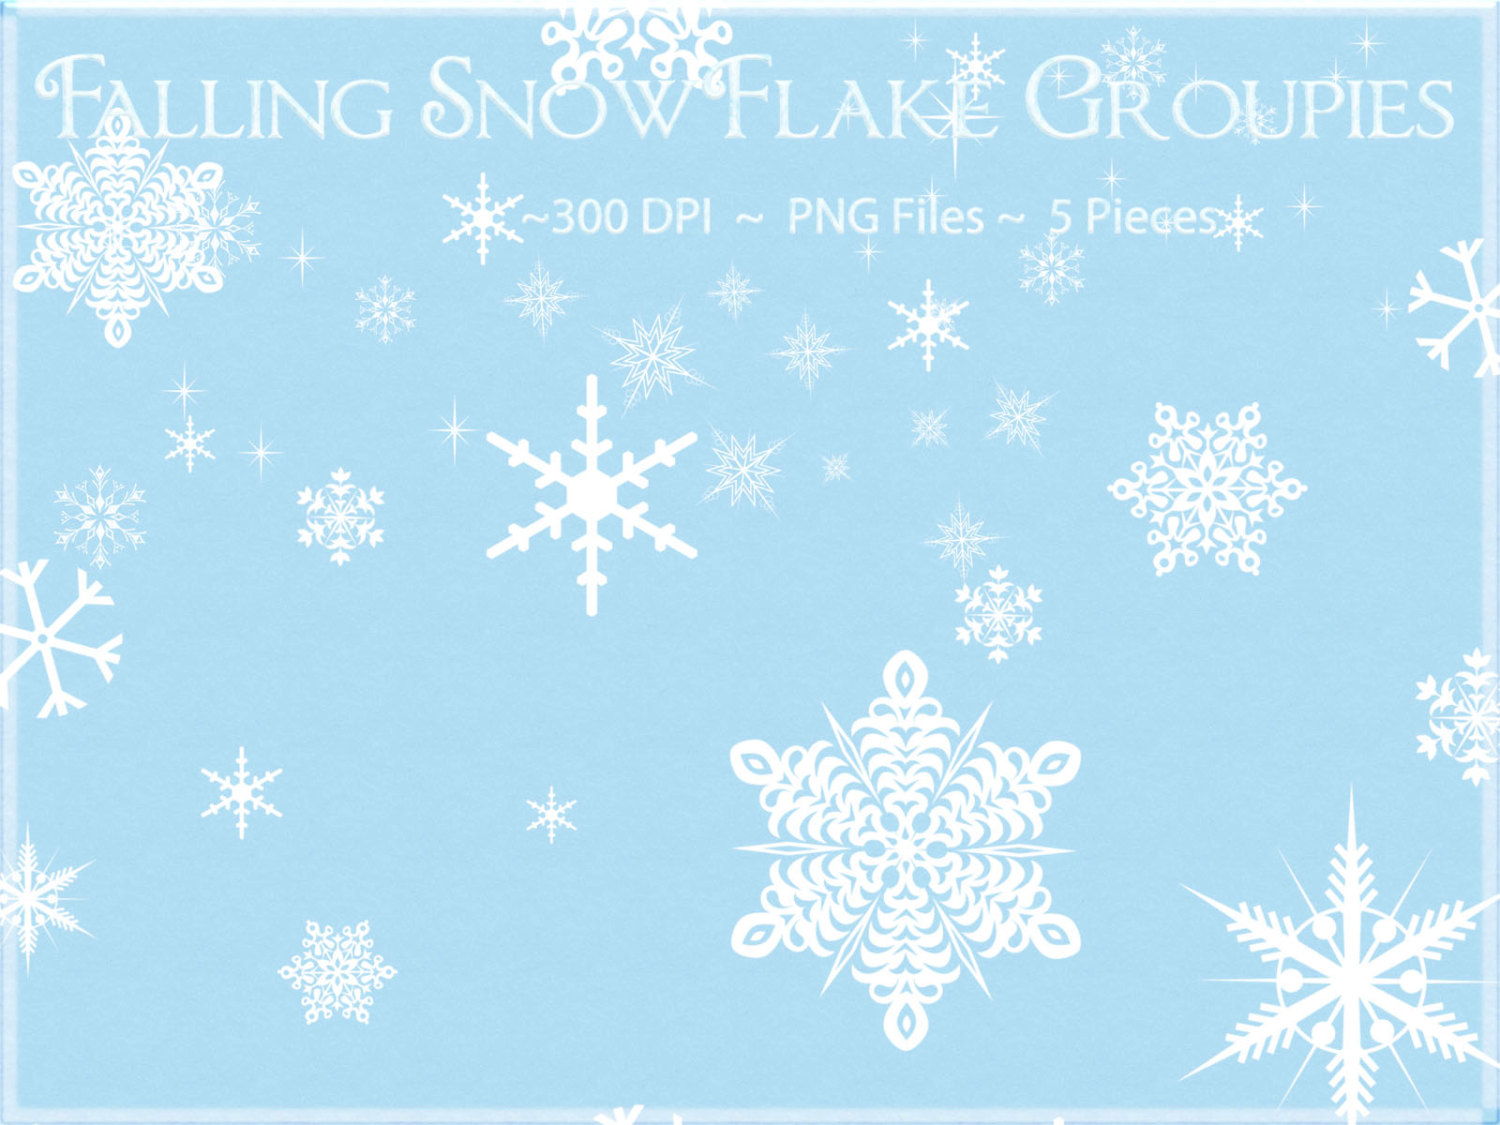 Snowflake Clipart, Falling Snowflake Clipart, Winter Clipart, Snow Clipart,  Snowflake